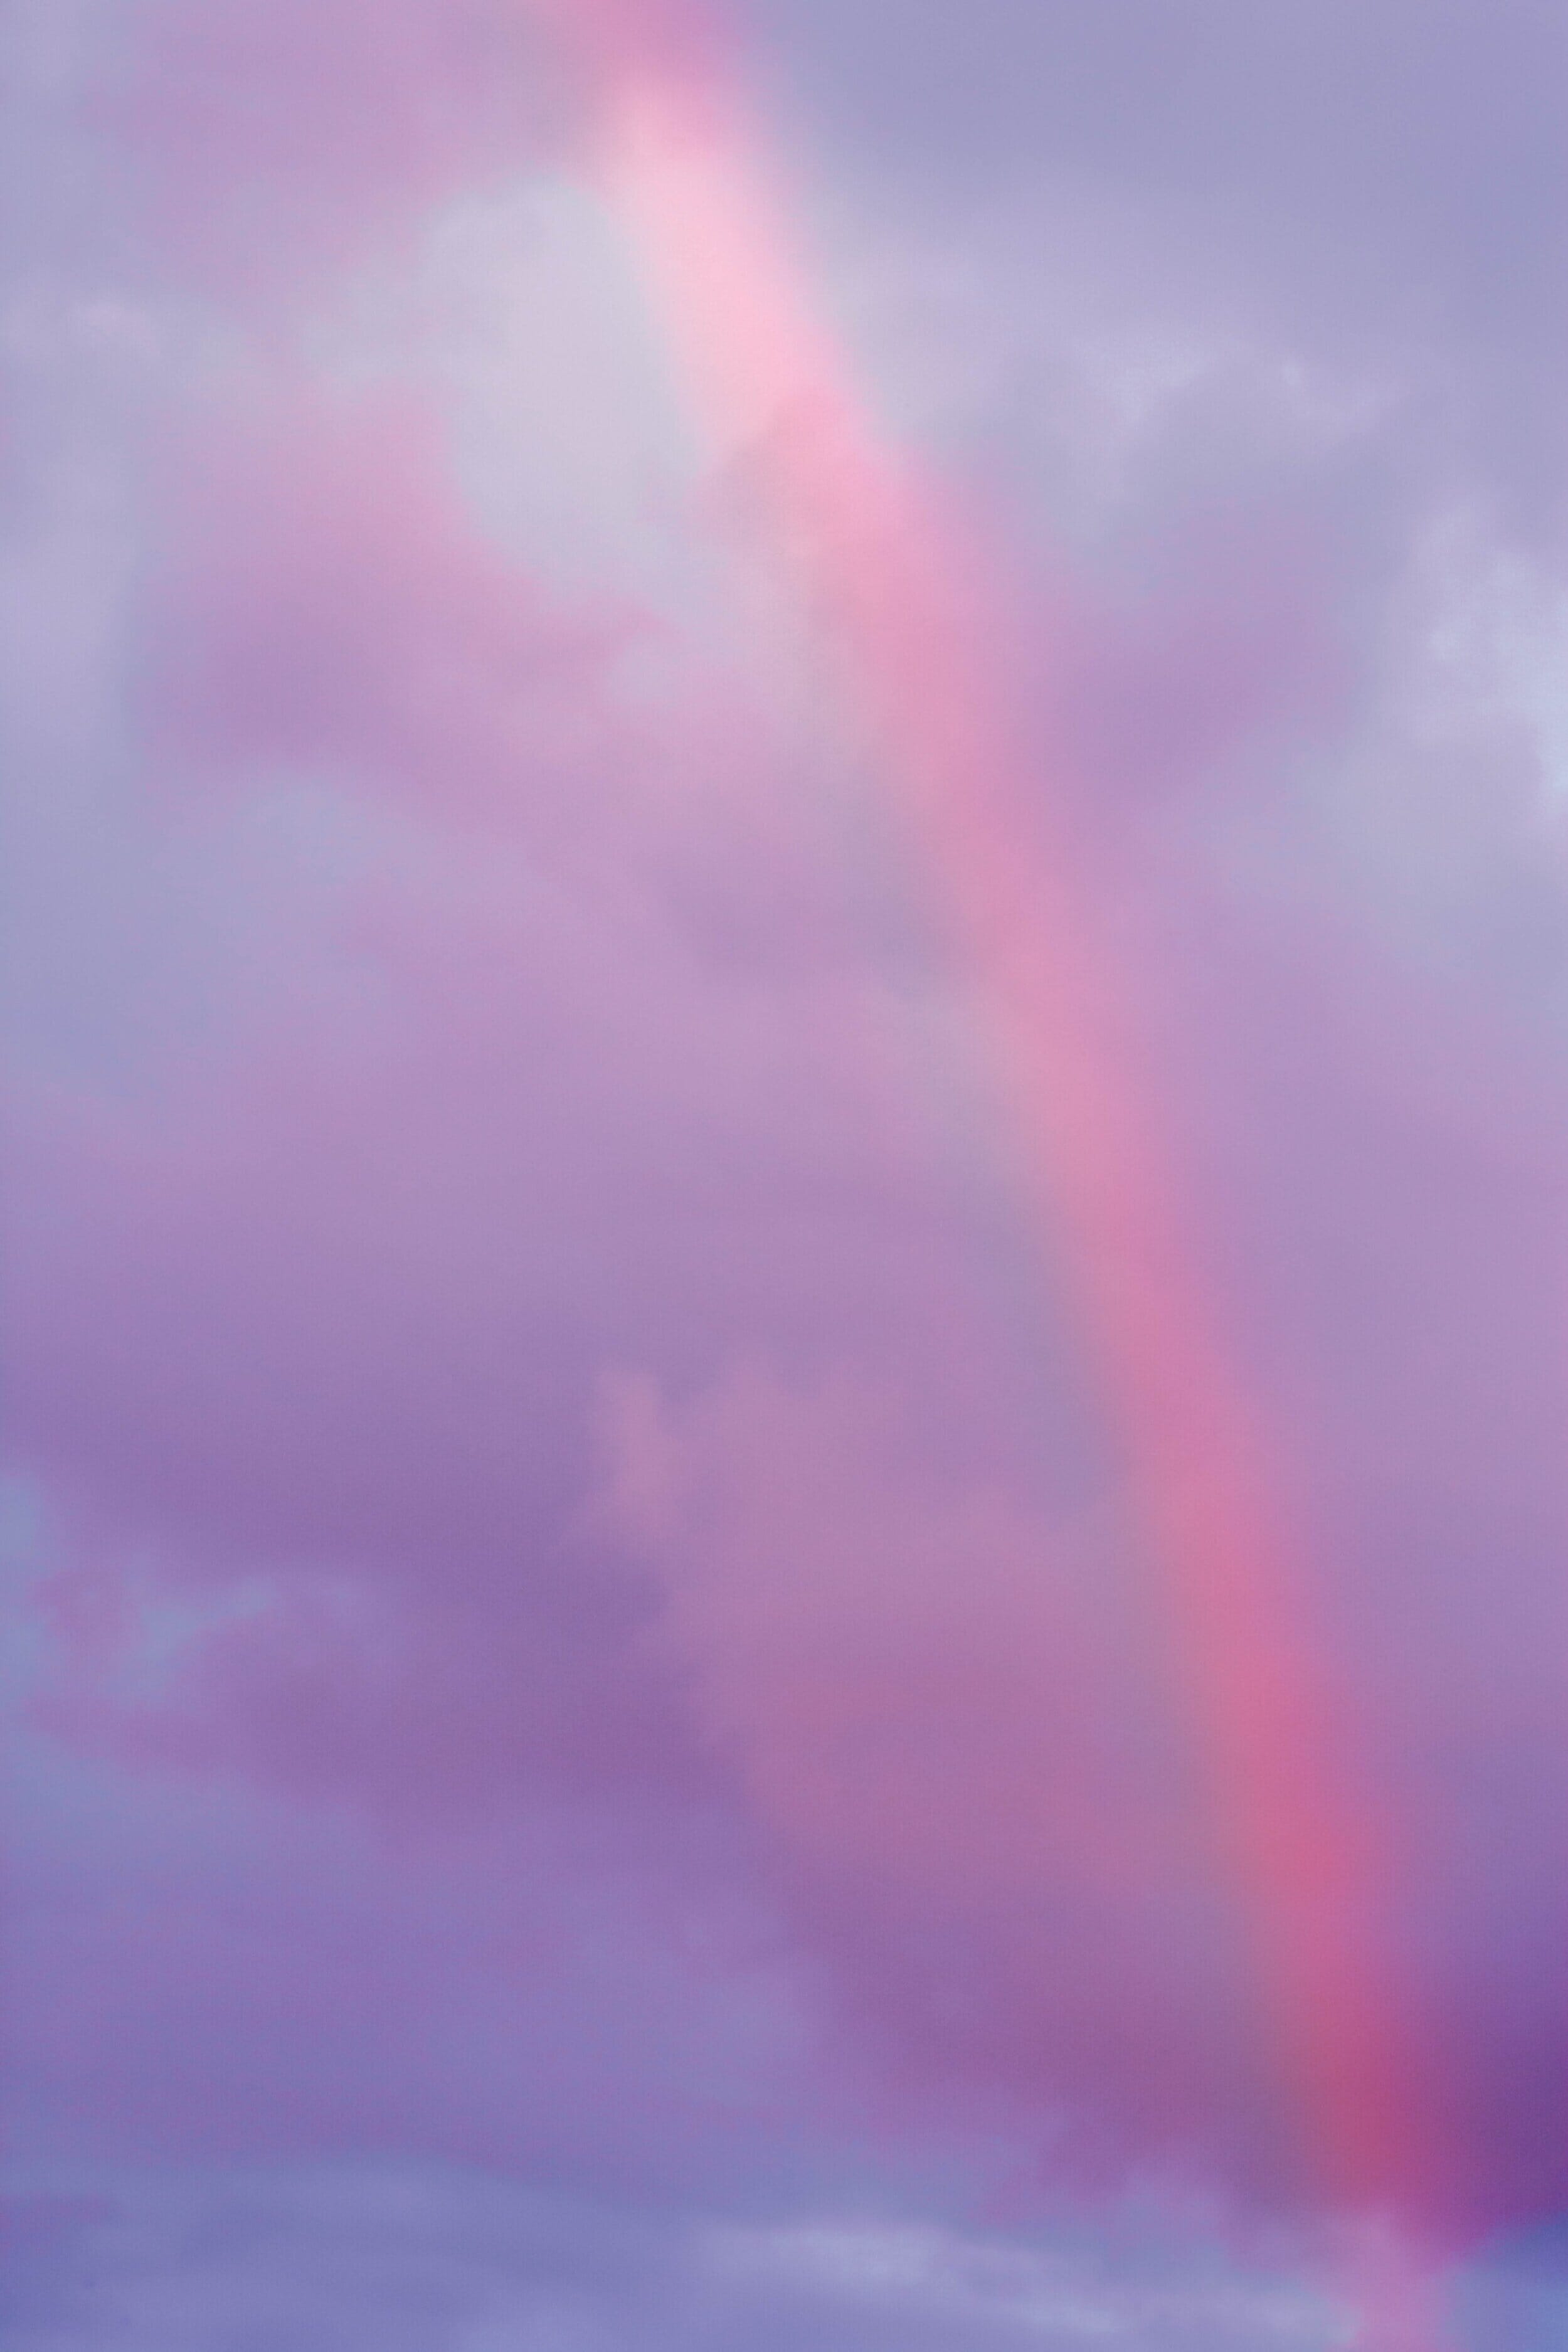 rainbow on a pastel sky